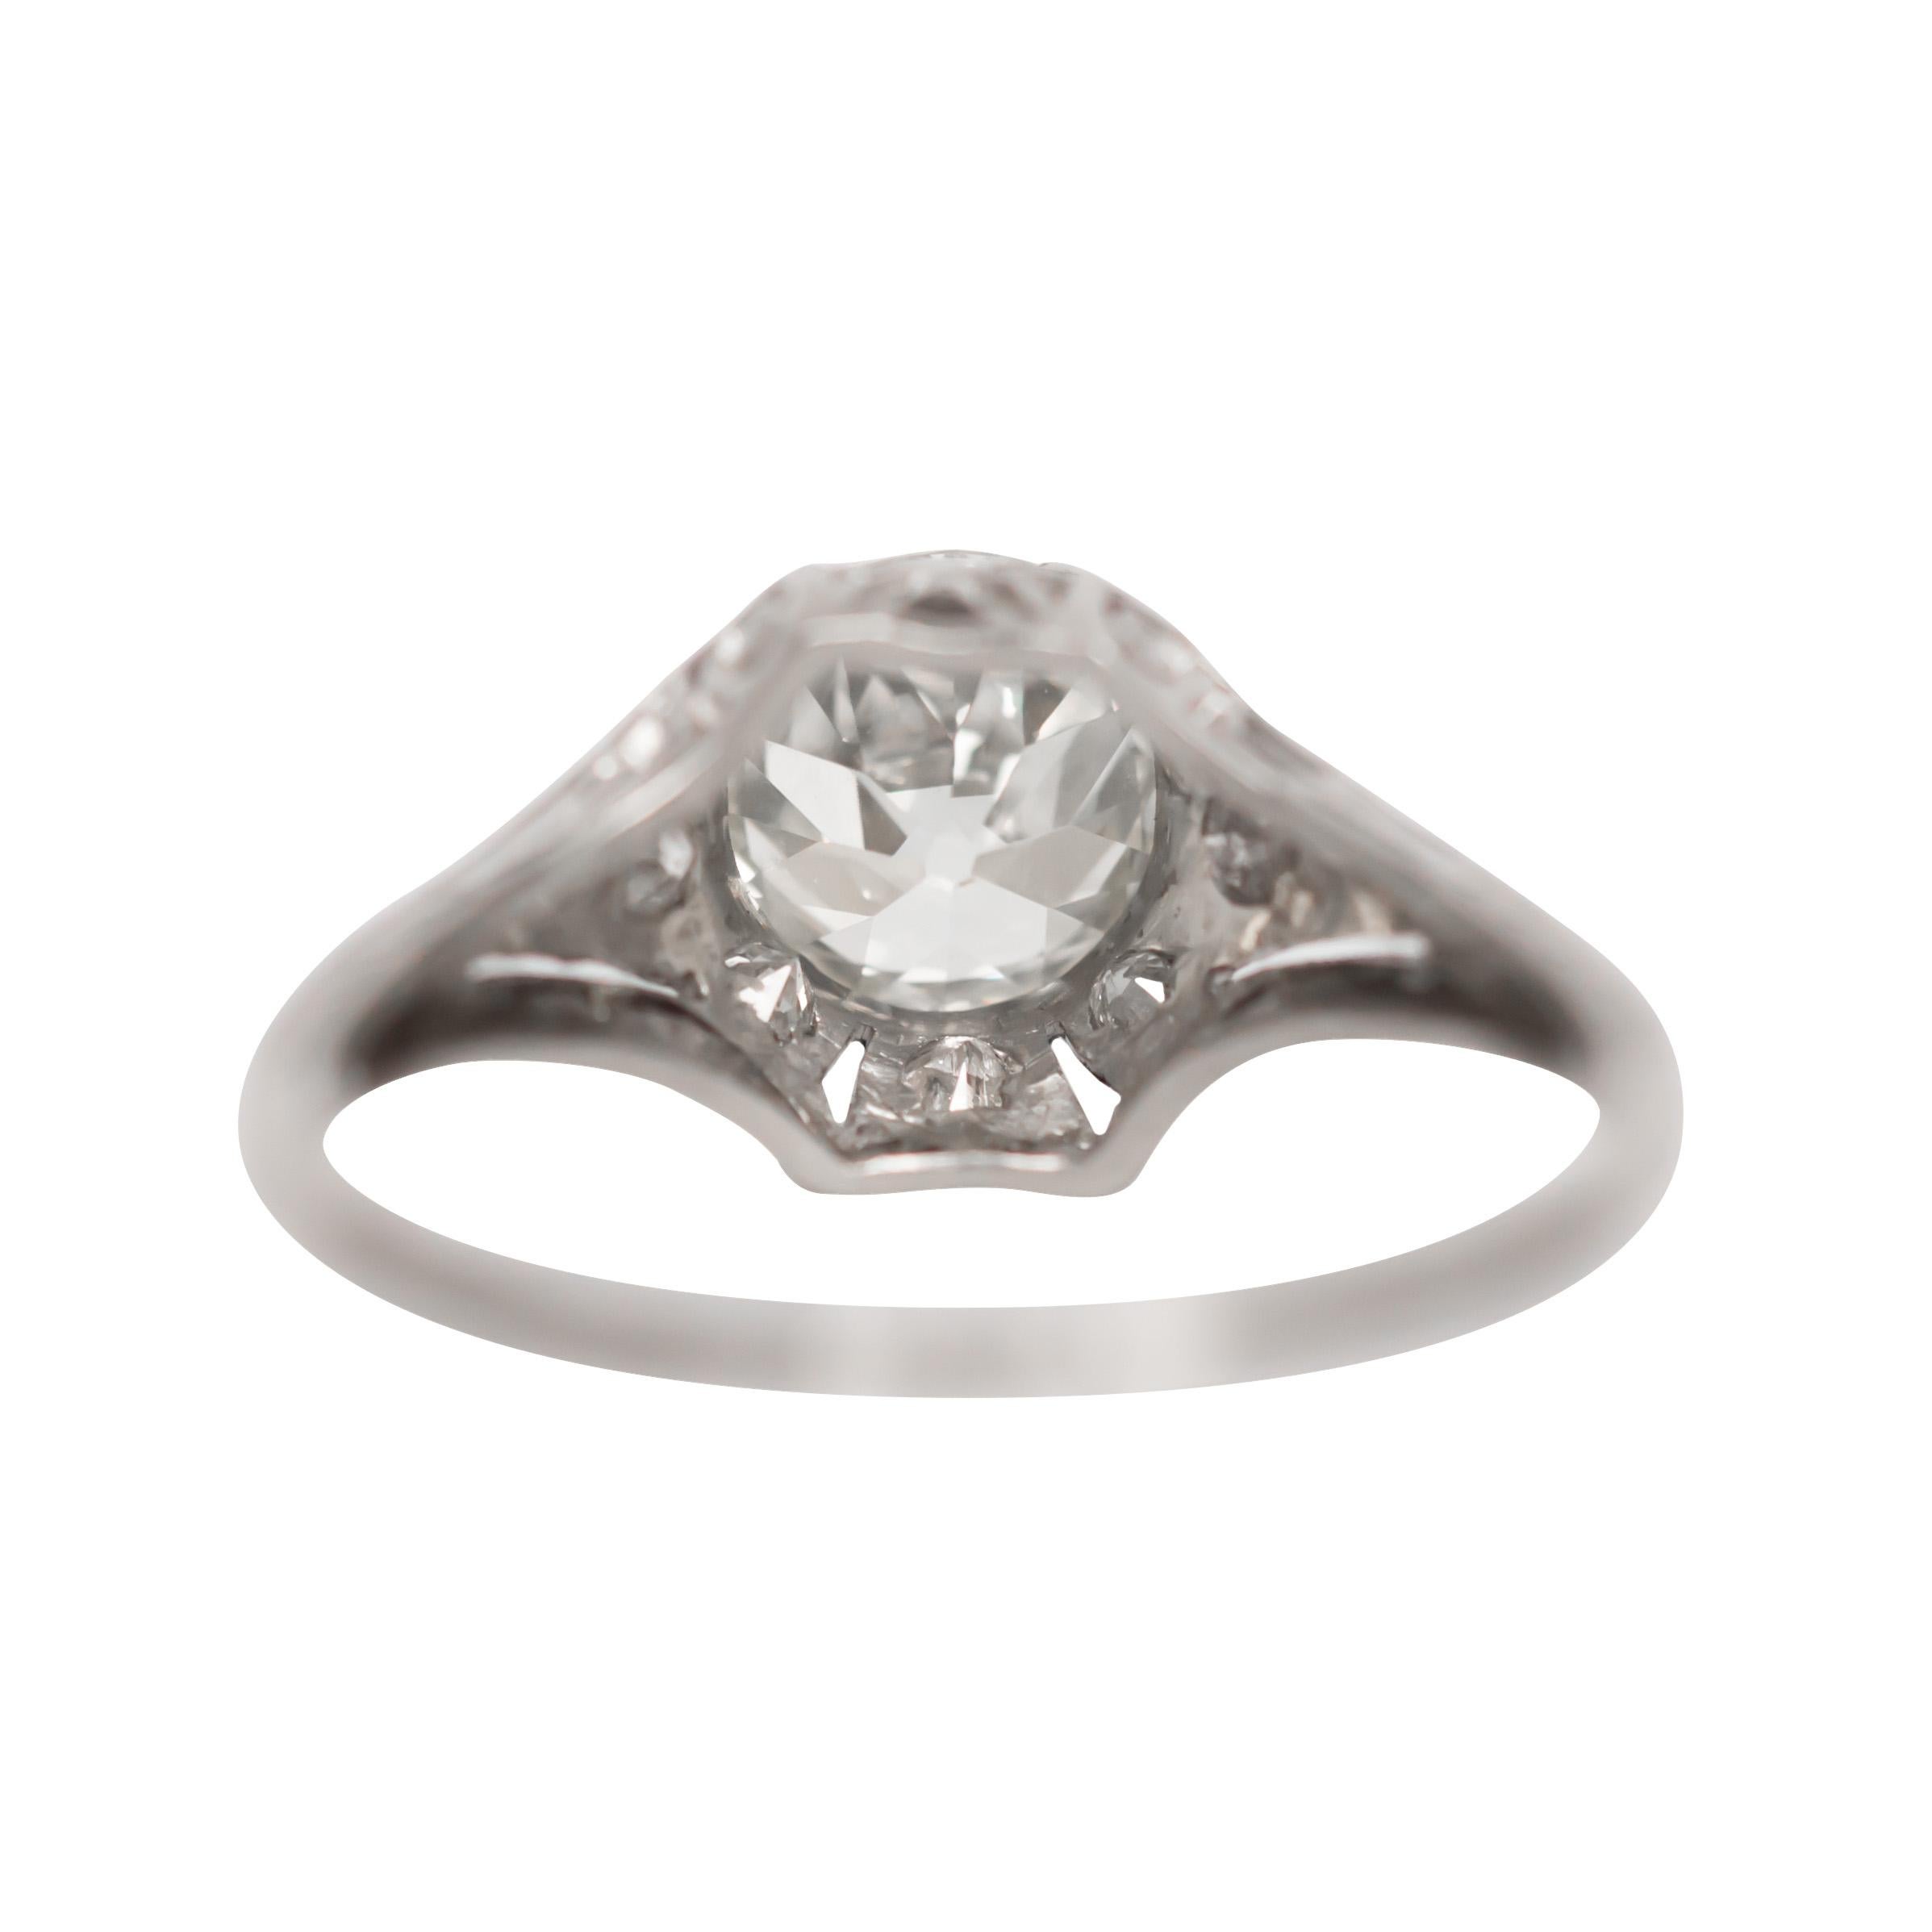 1.51 carat diamond ring